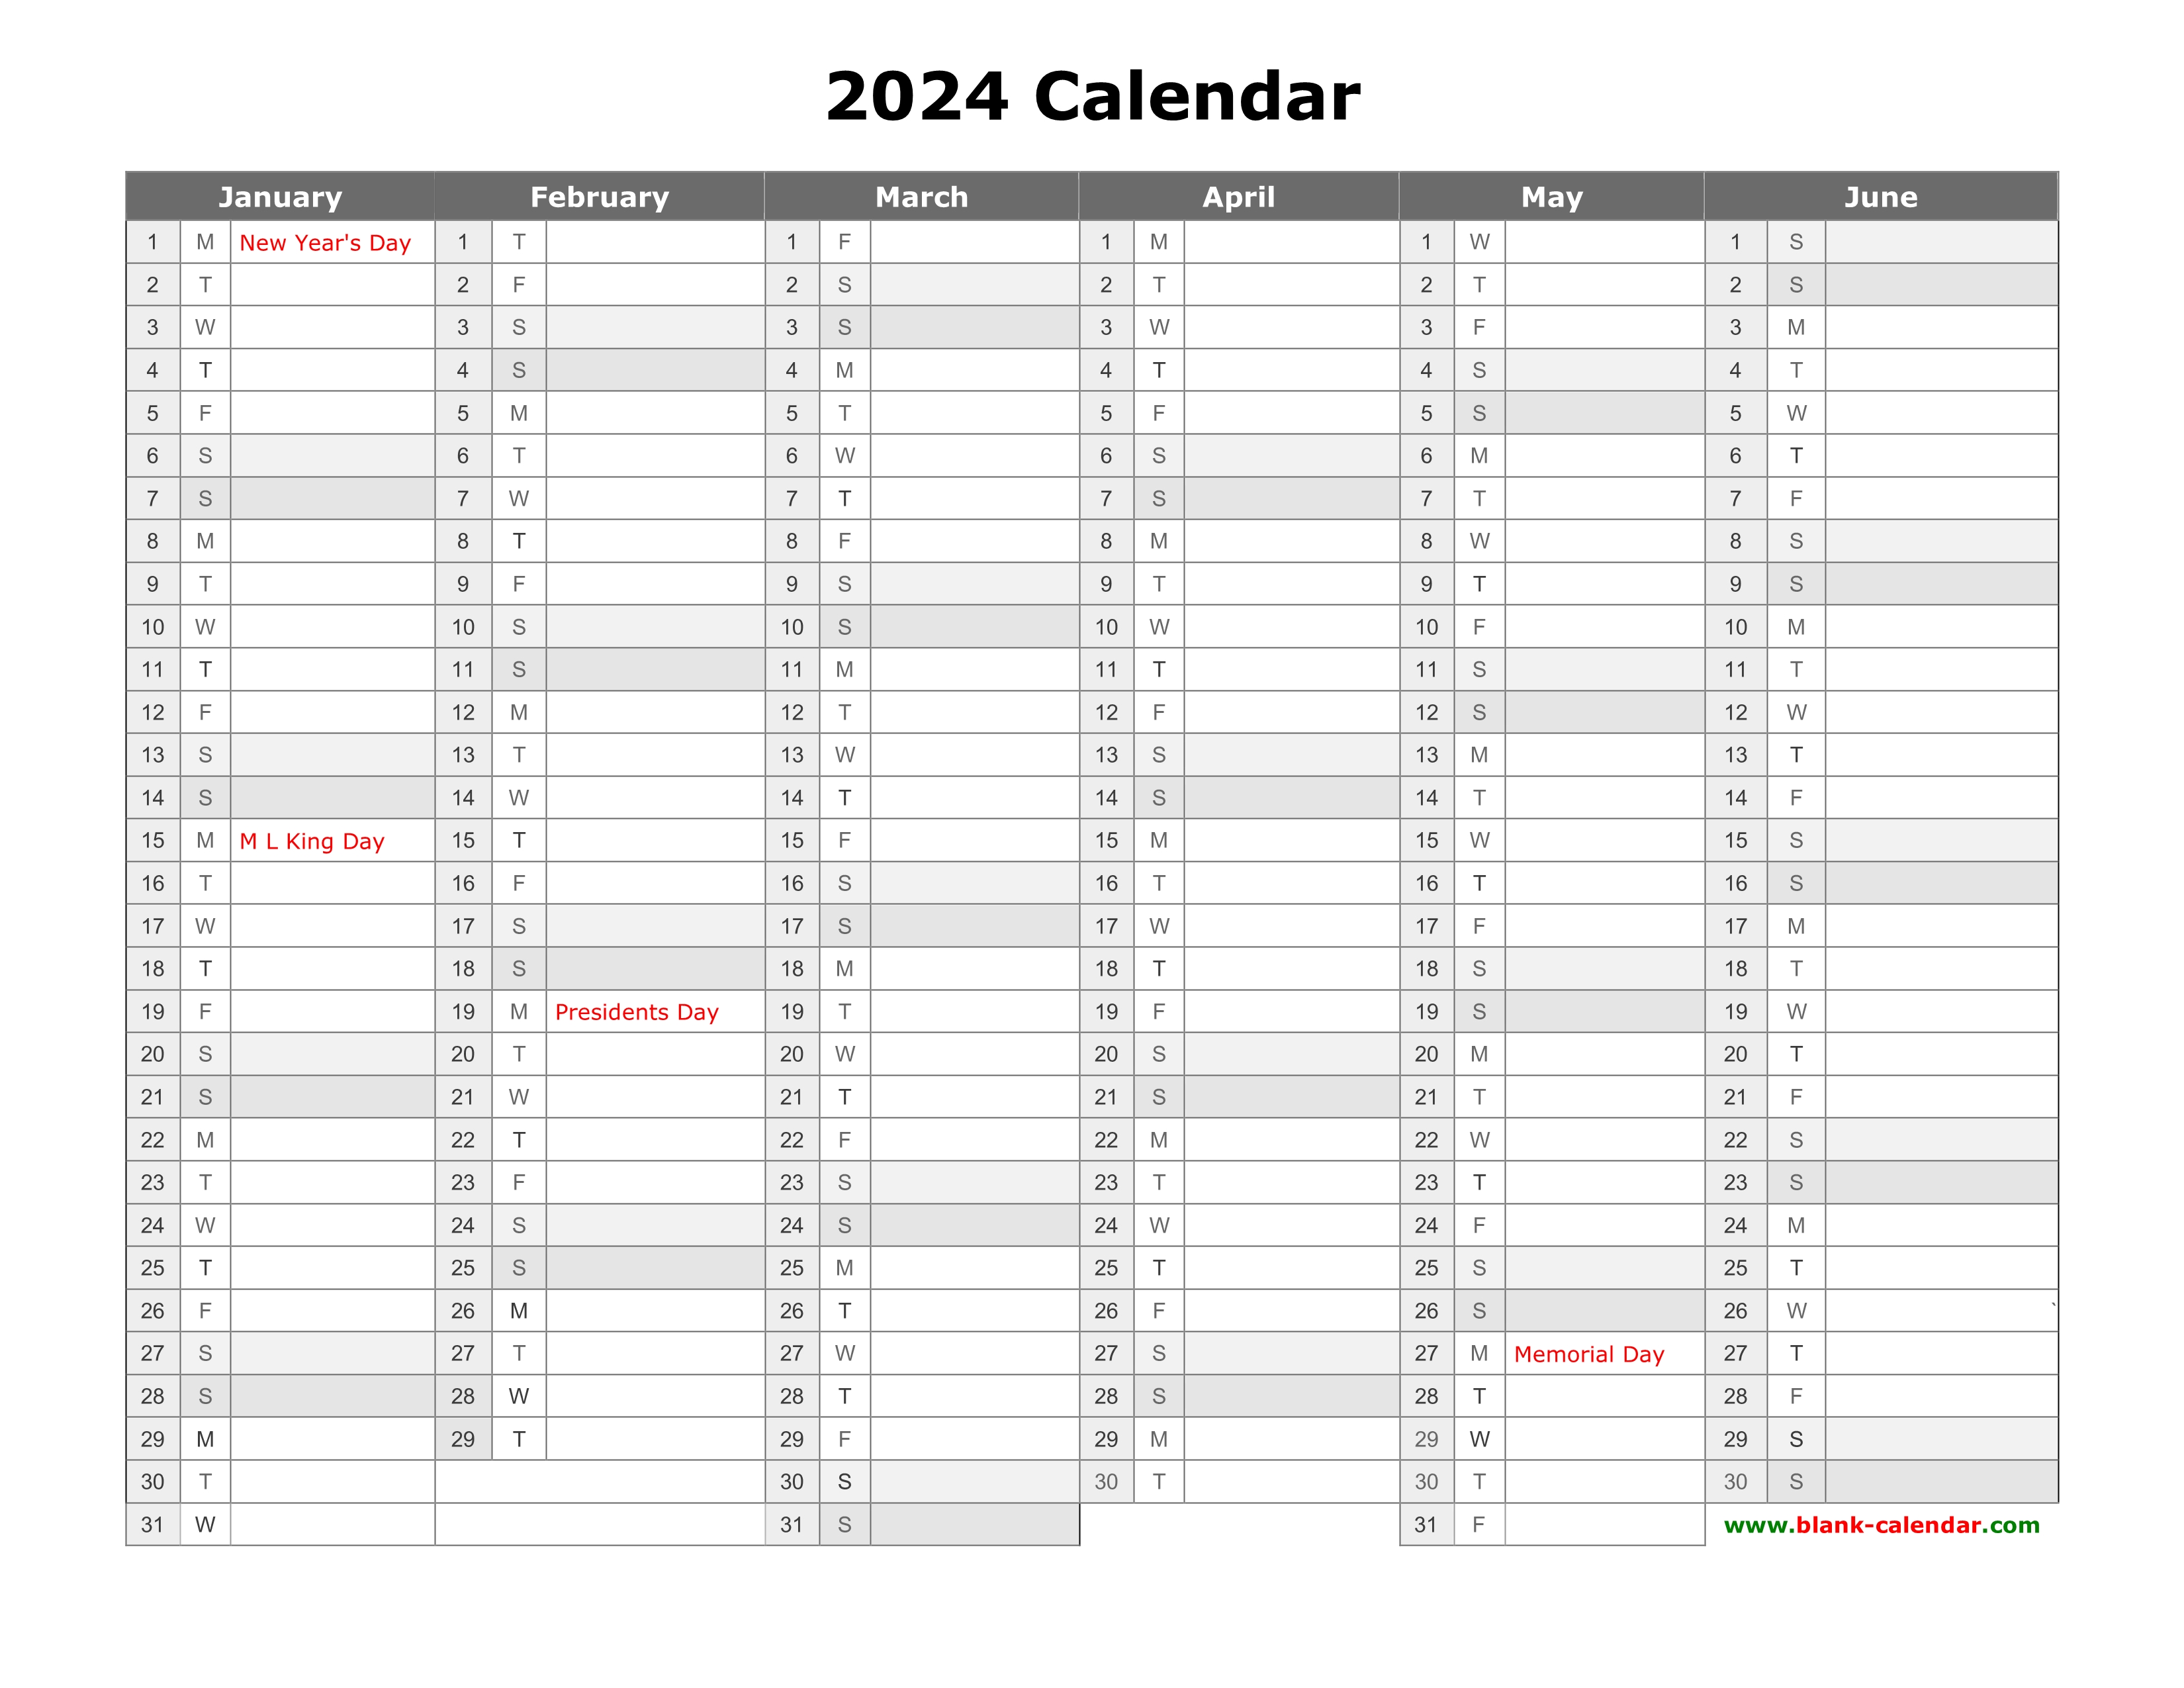 free printable calendars calendarsquick full year calendar 2021